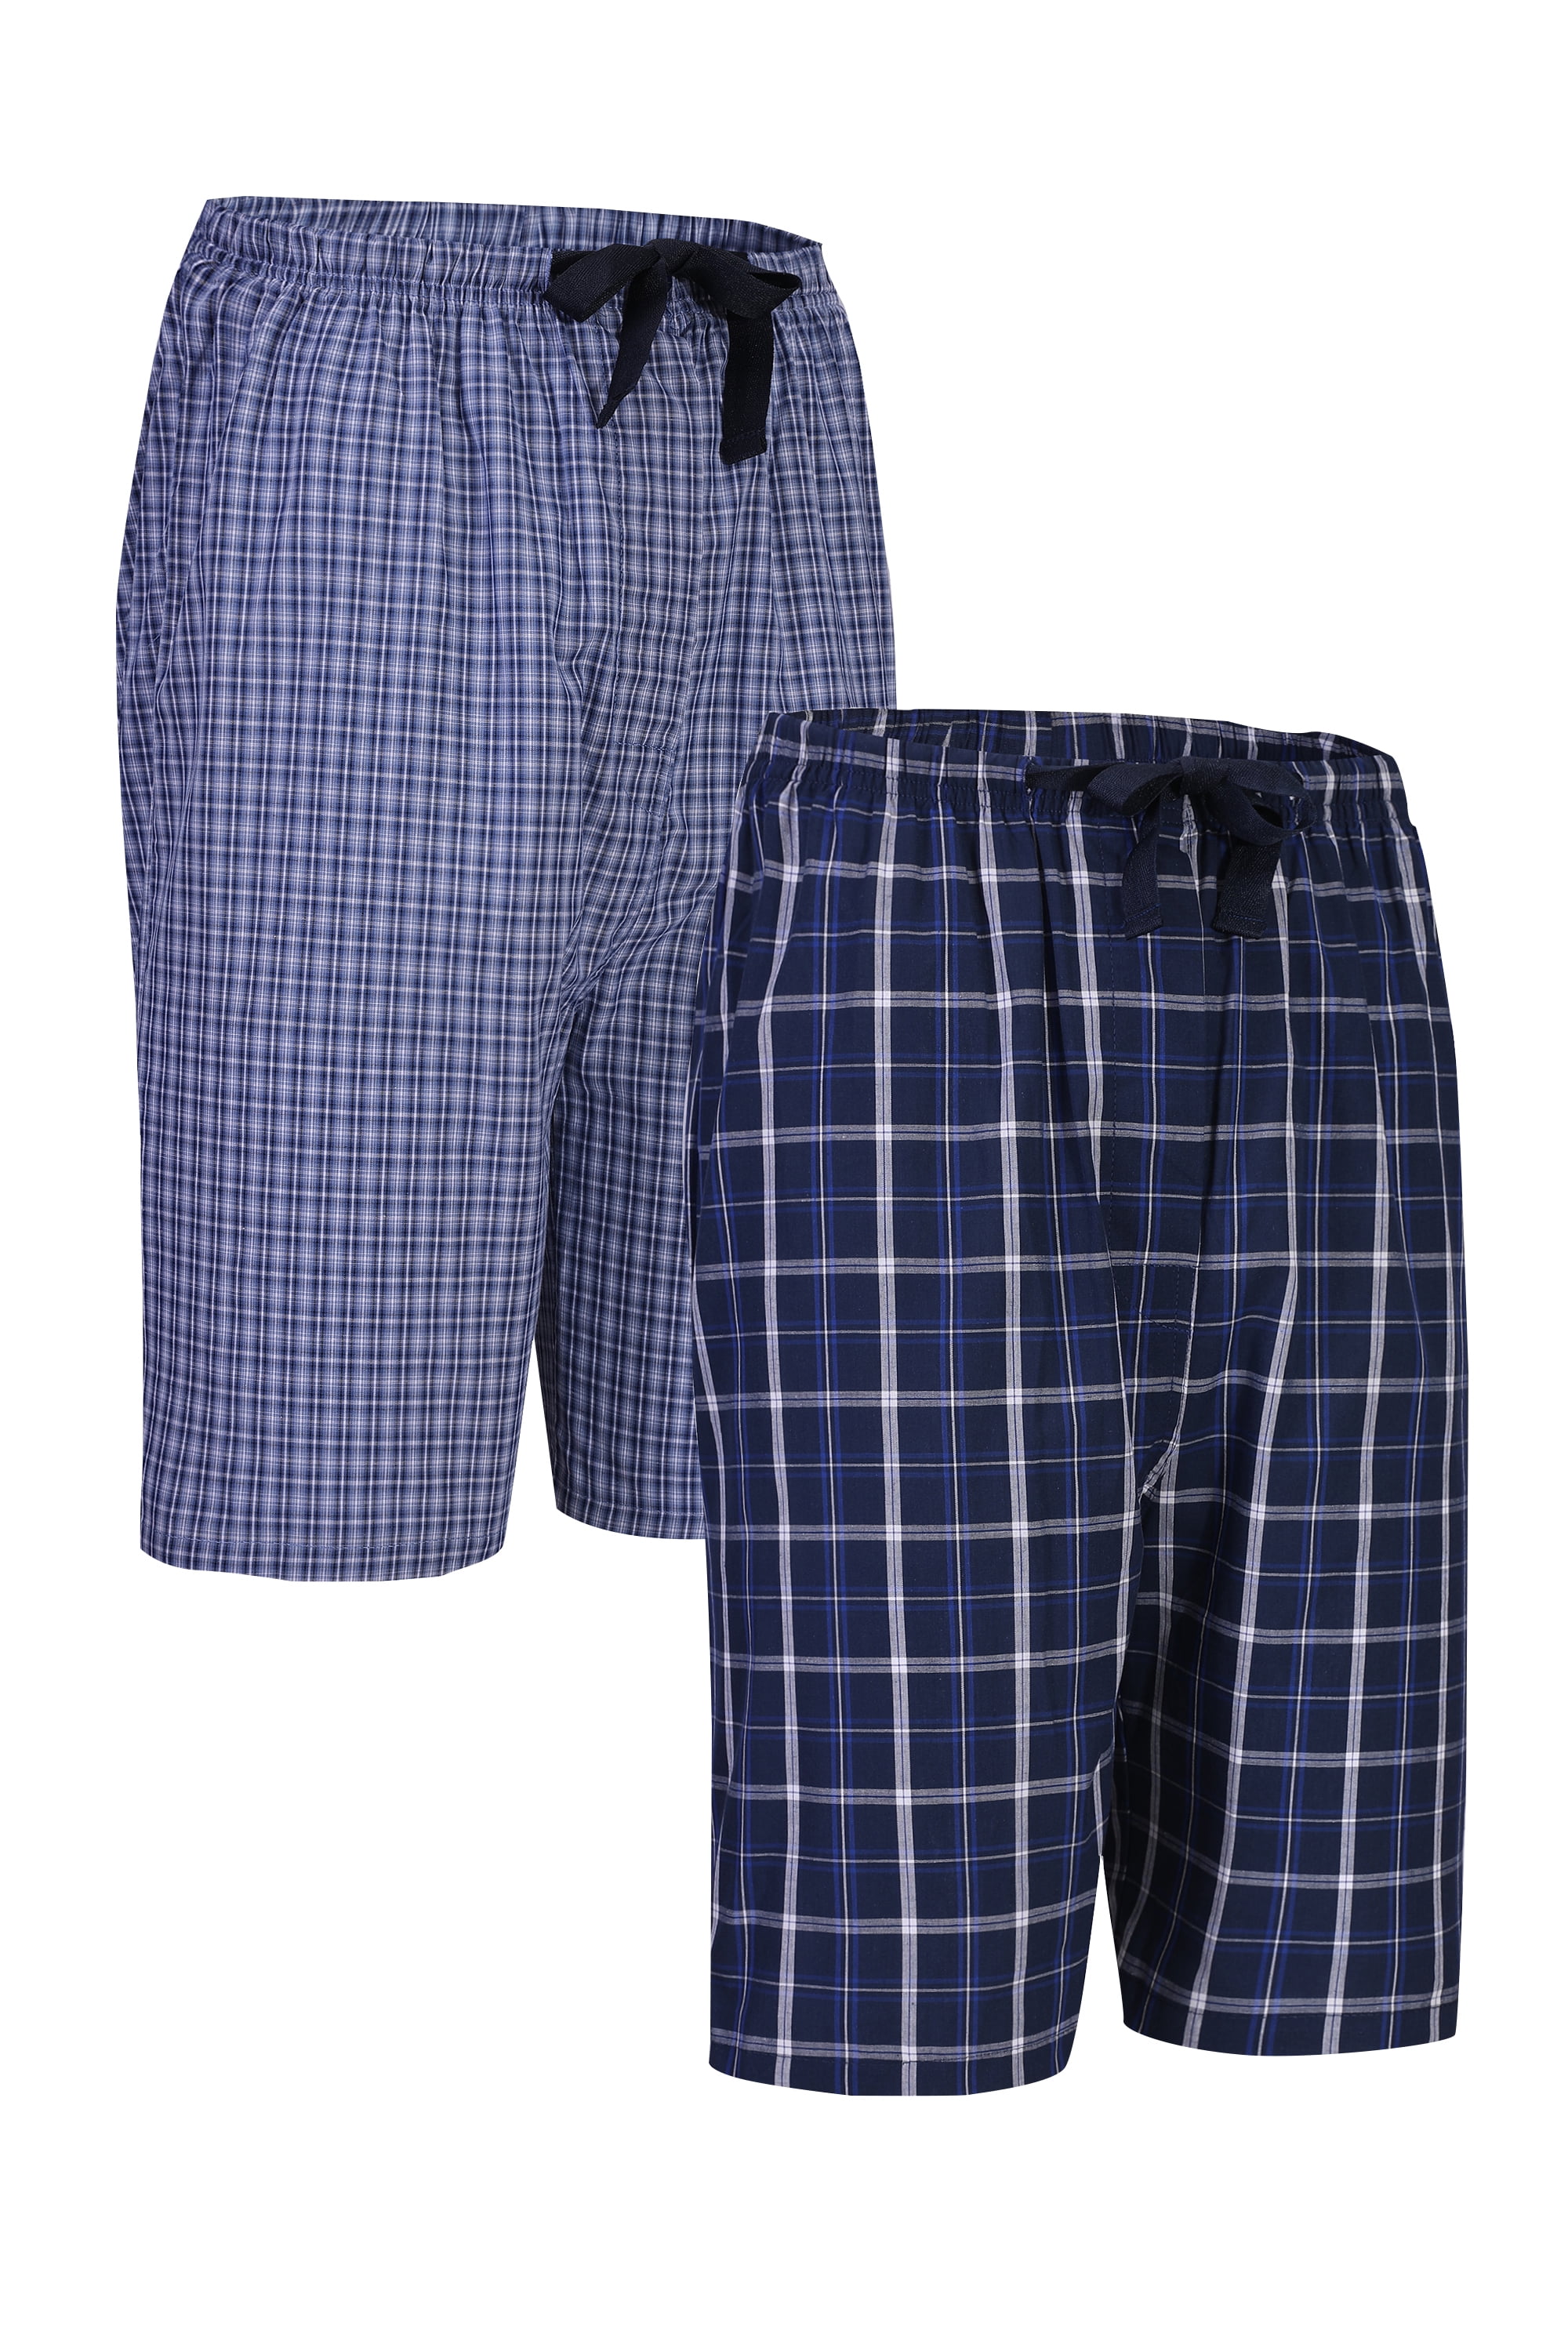 Men's Cotton Yarn Pajamas Shorts - Plaid Pajama Shorts for Men - PJ ...